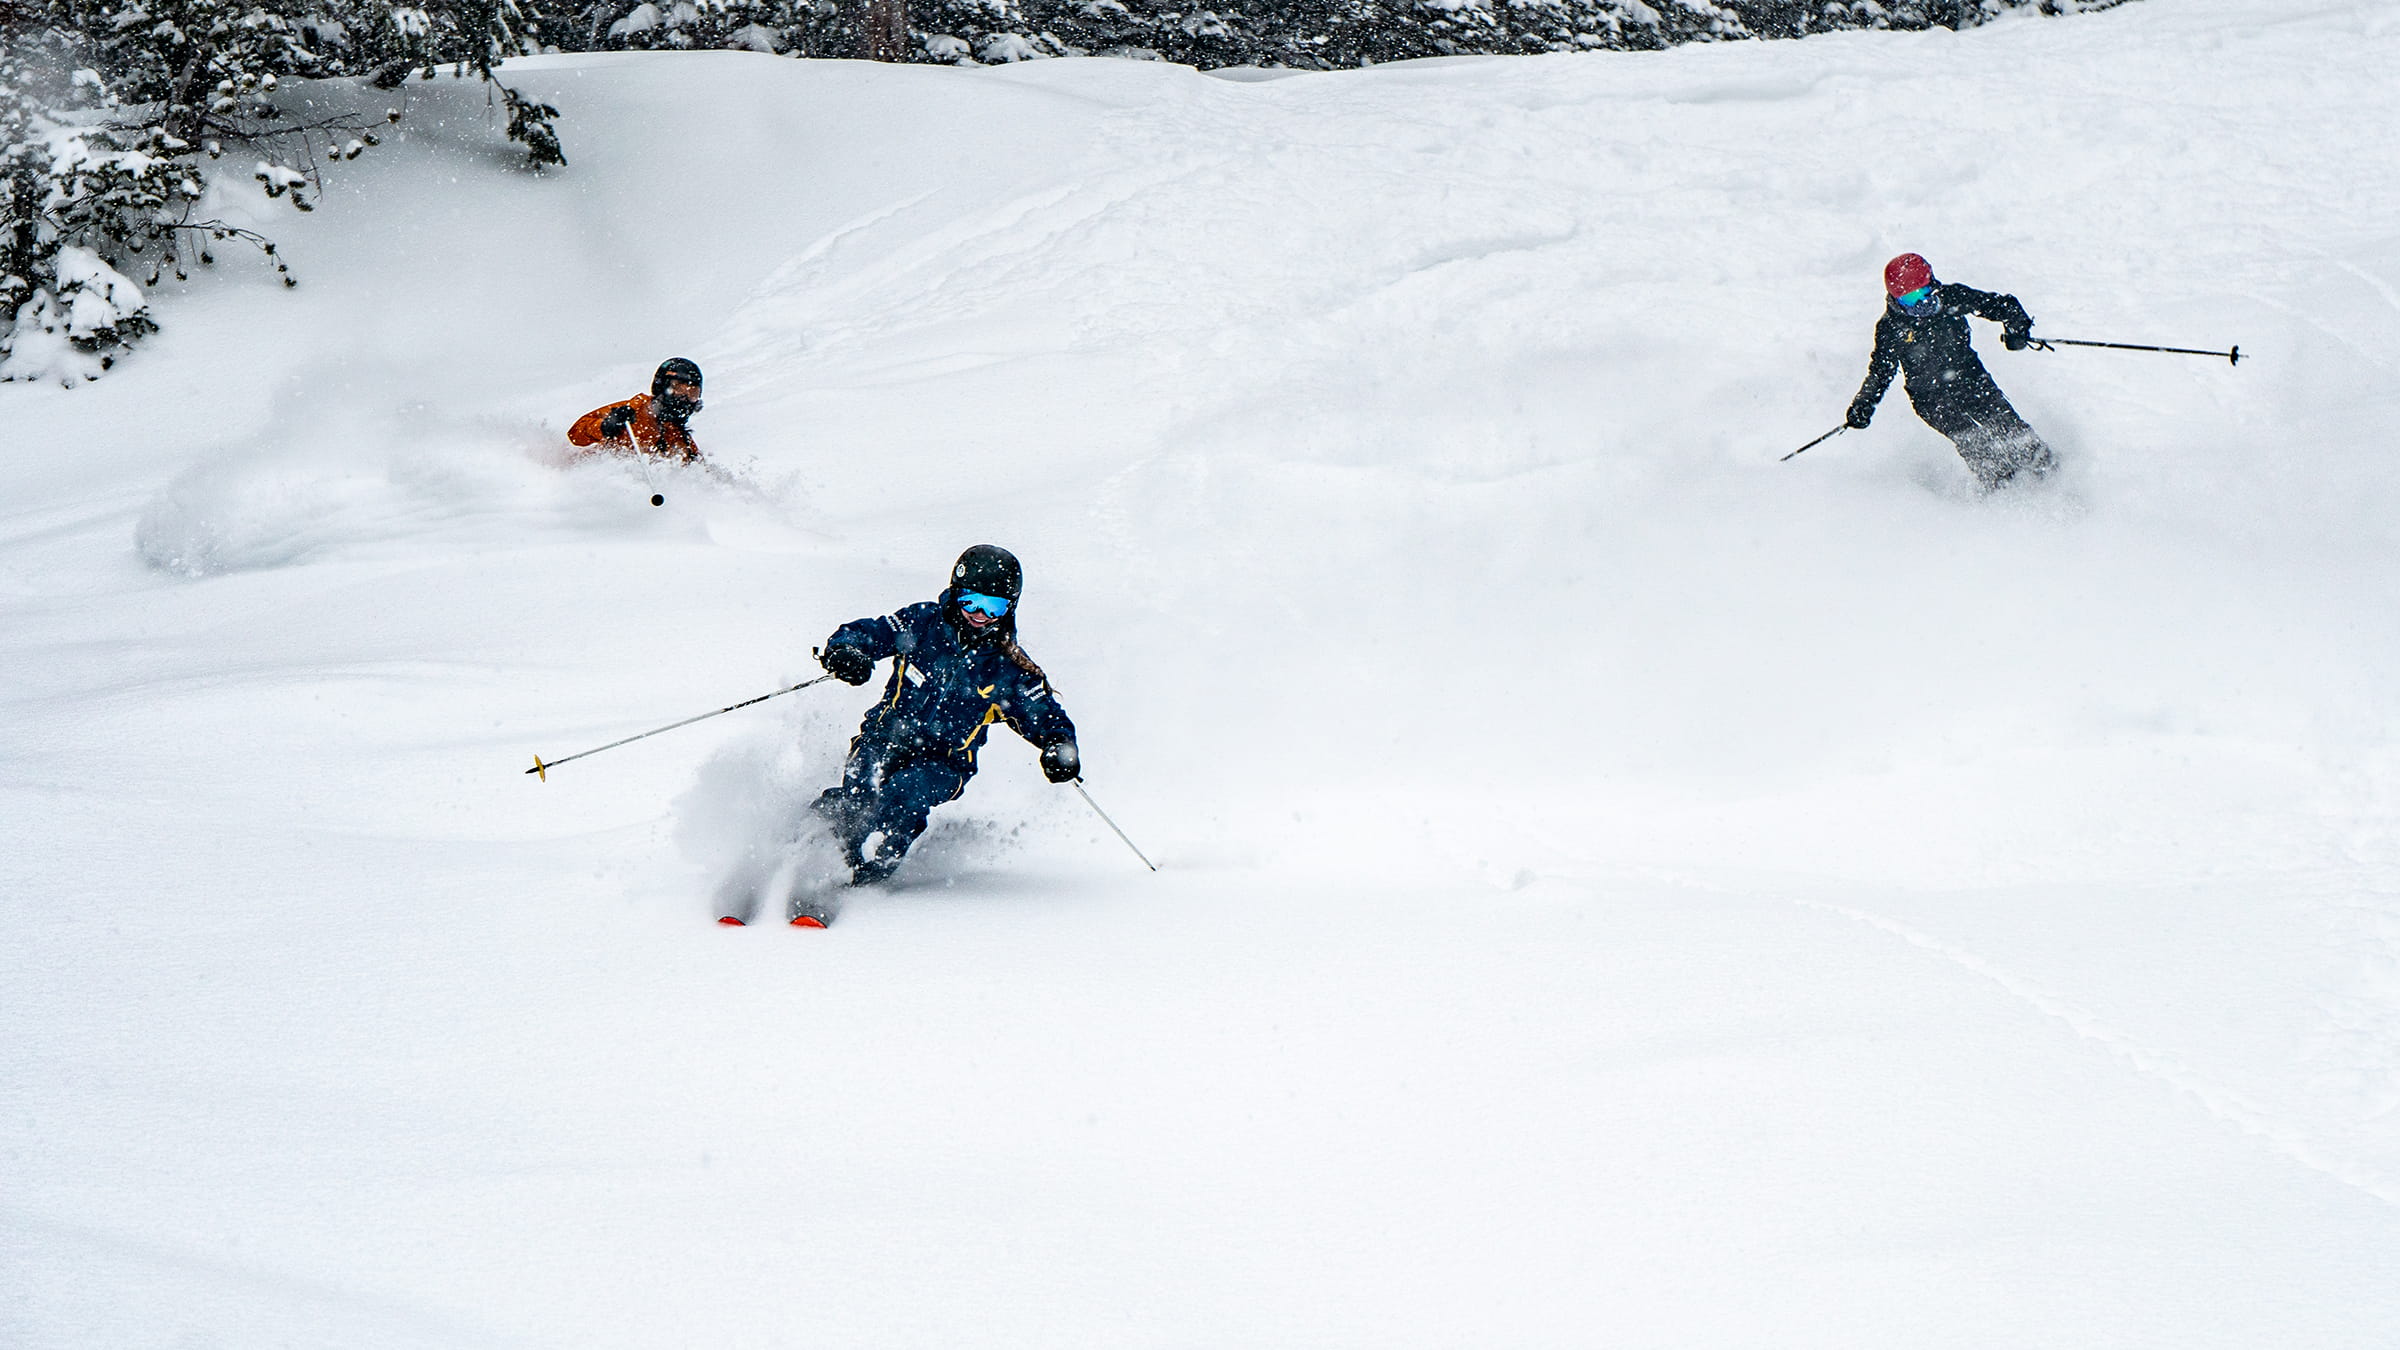 Big Mountain Coach guides two skiers on the big mountain team through fun and deep powder